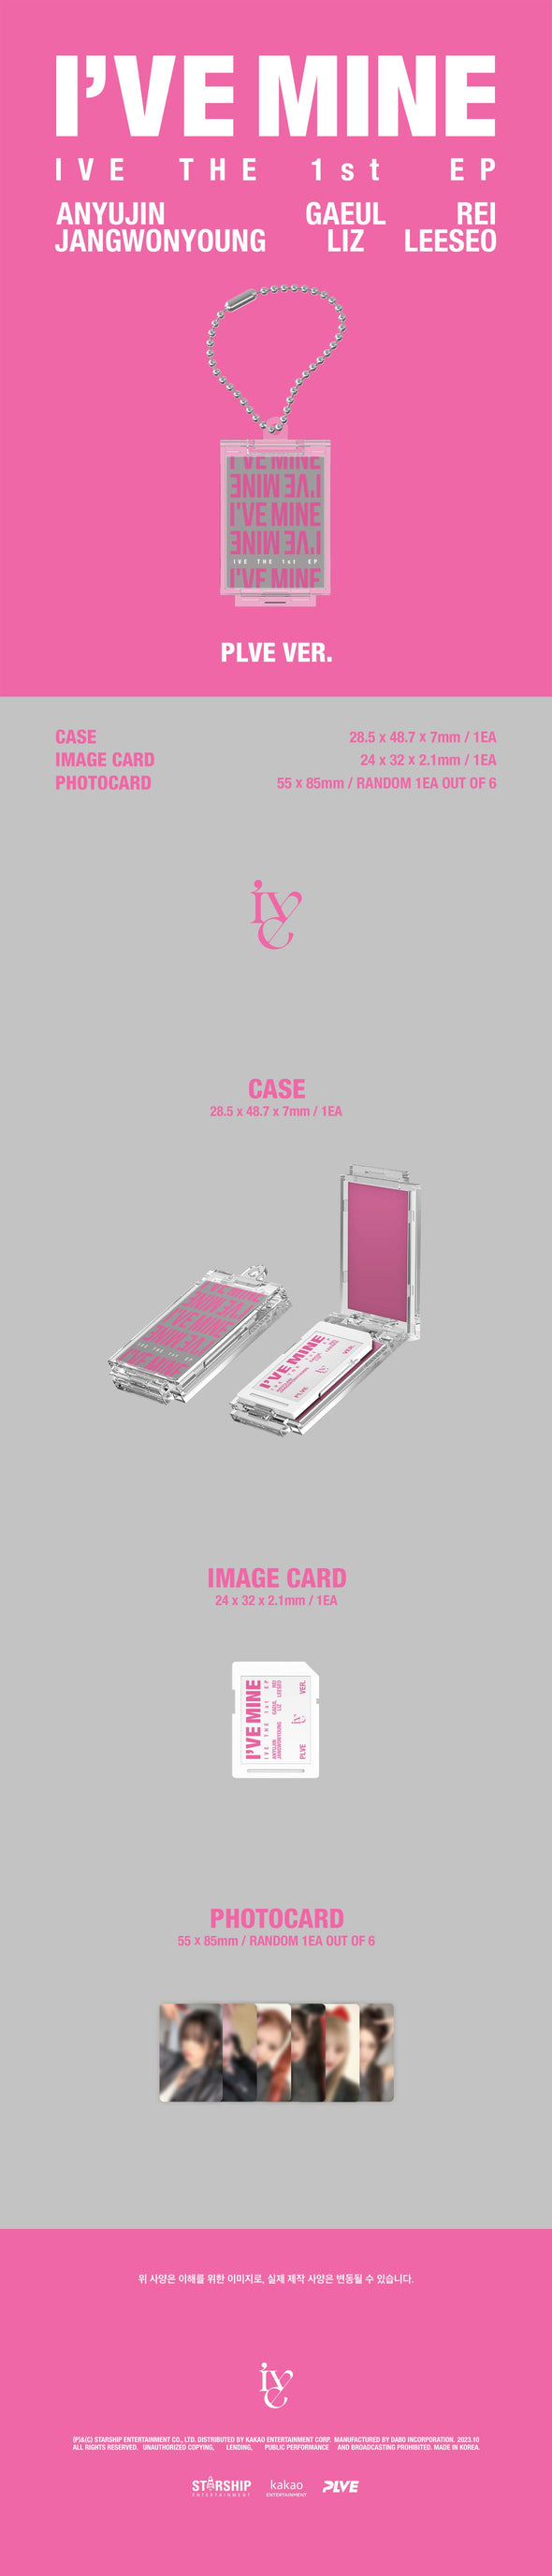 IVE - 1st EP Album [I'VE MINE] PLVE - Kpop Music 사랑해요